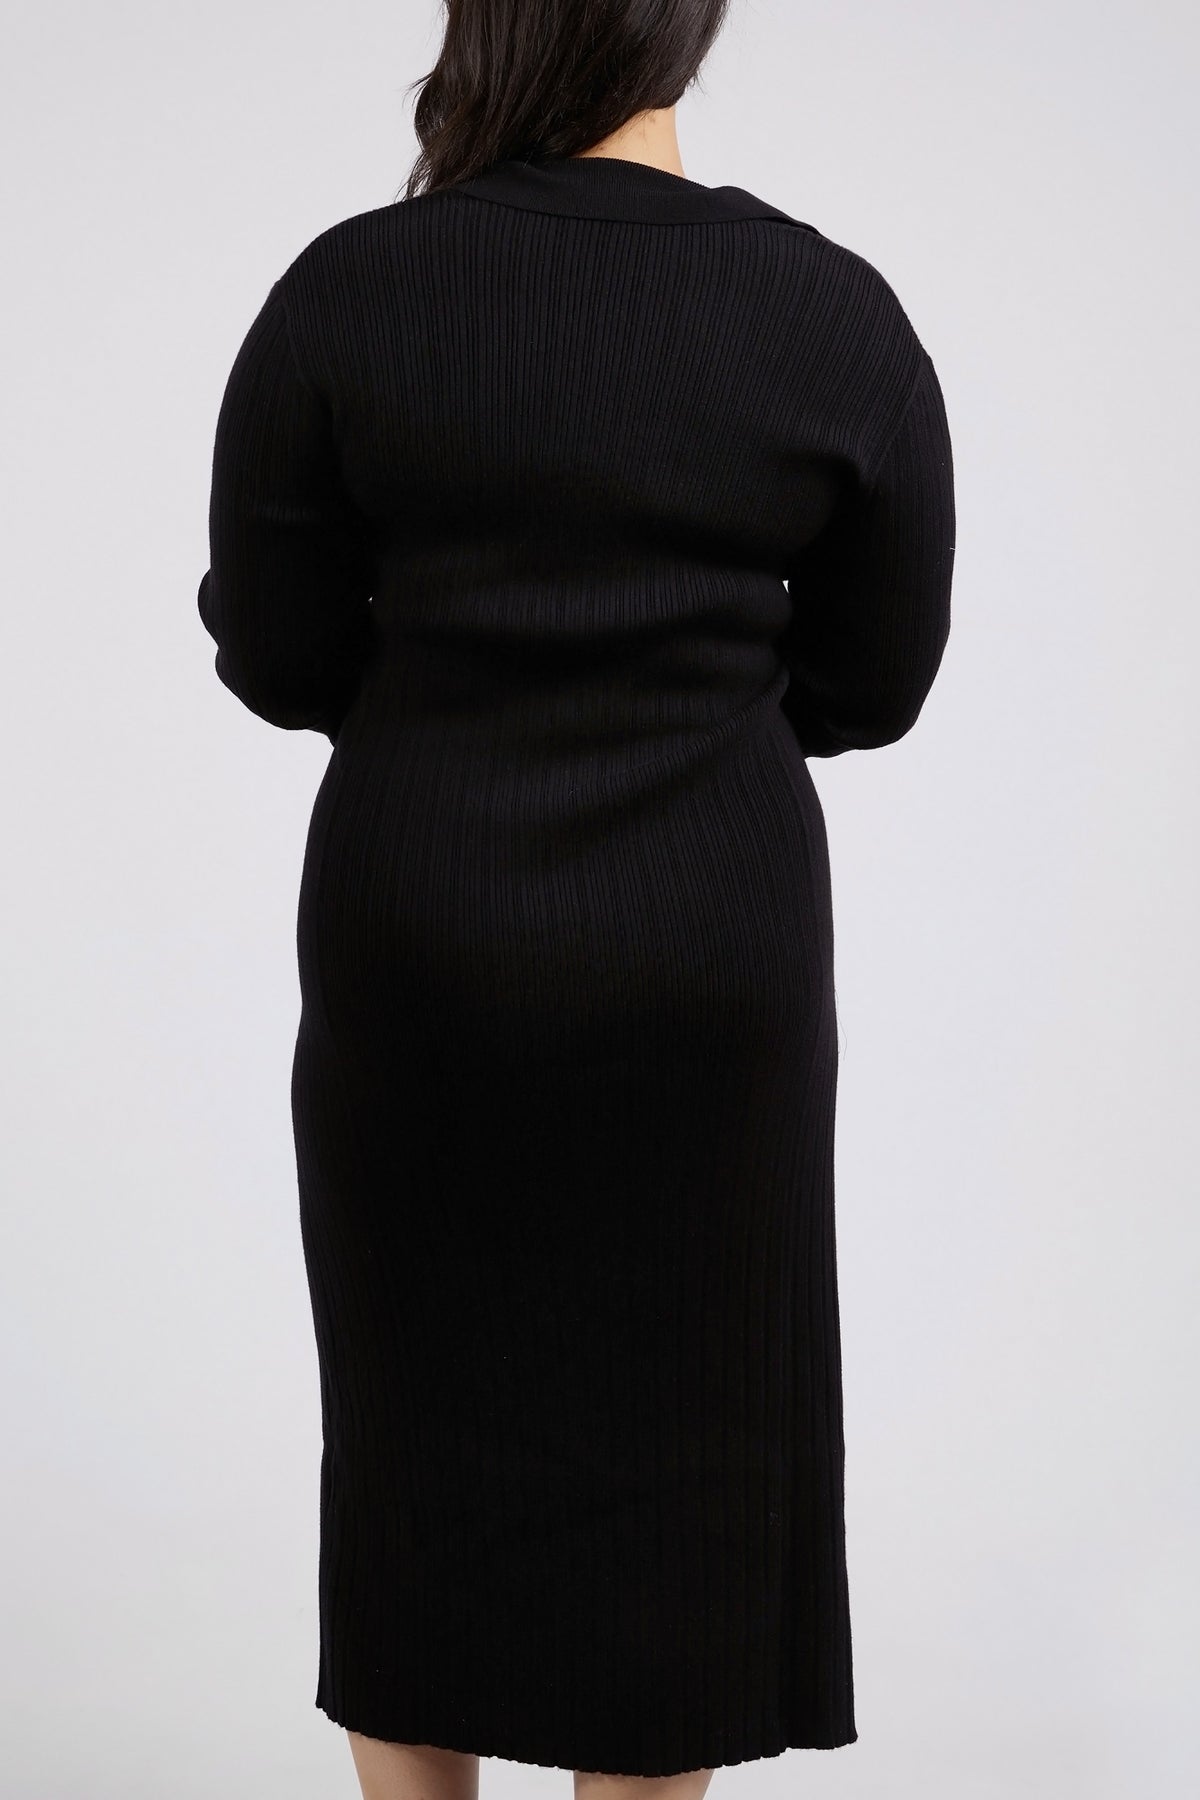 Maple Knit Dress Black